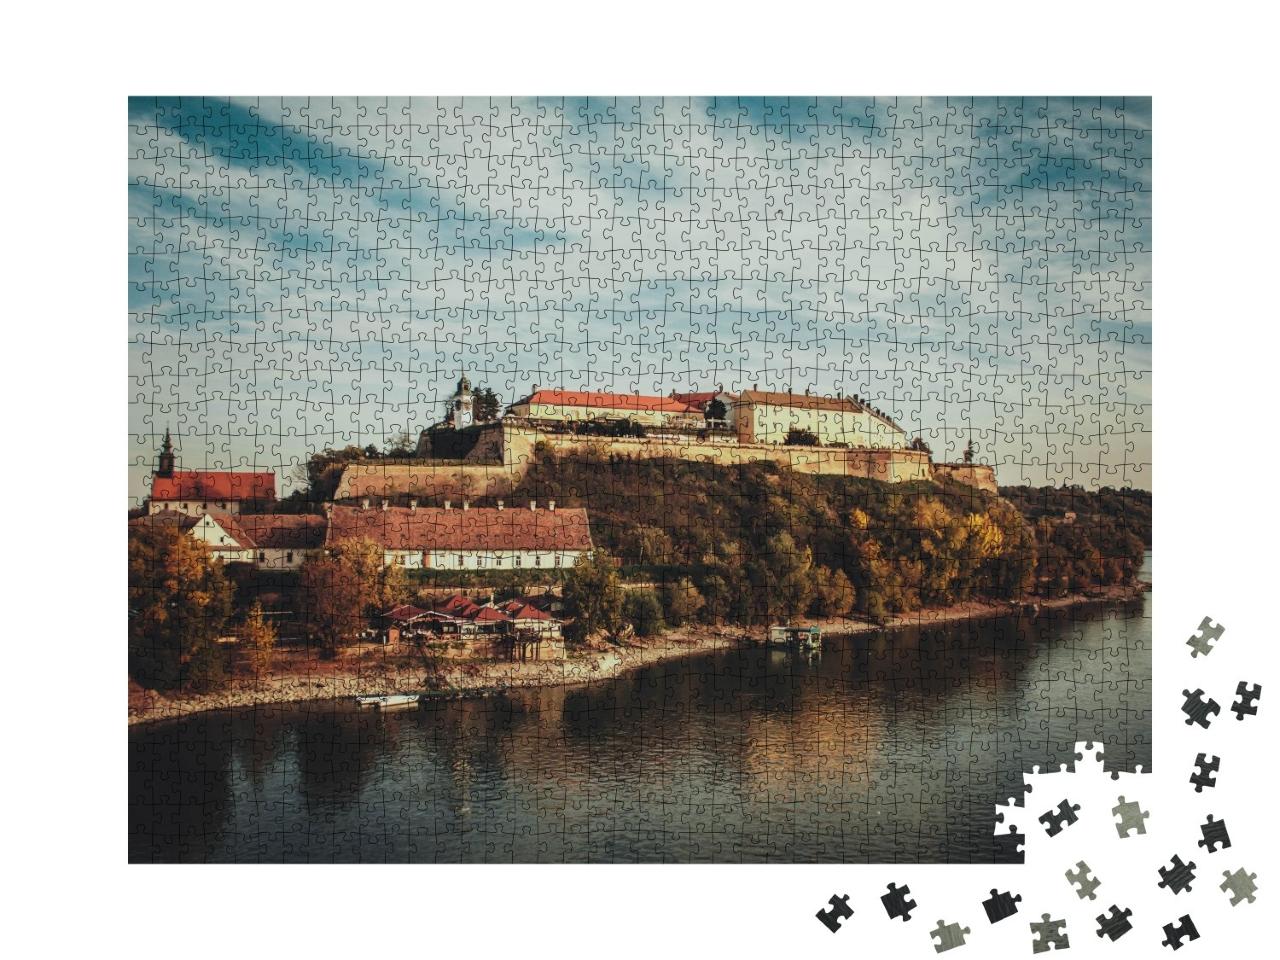 Puzzle de 1000 pièces « La forteresse de Petrovaradin et le Danube, Novi Sad, Serbie »